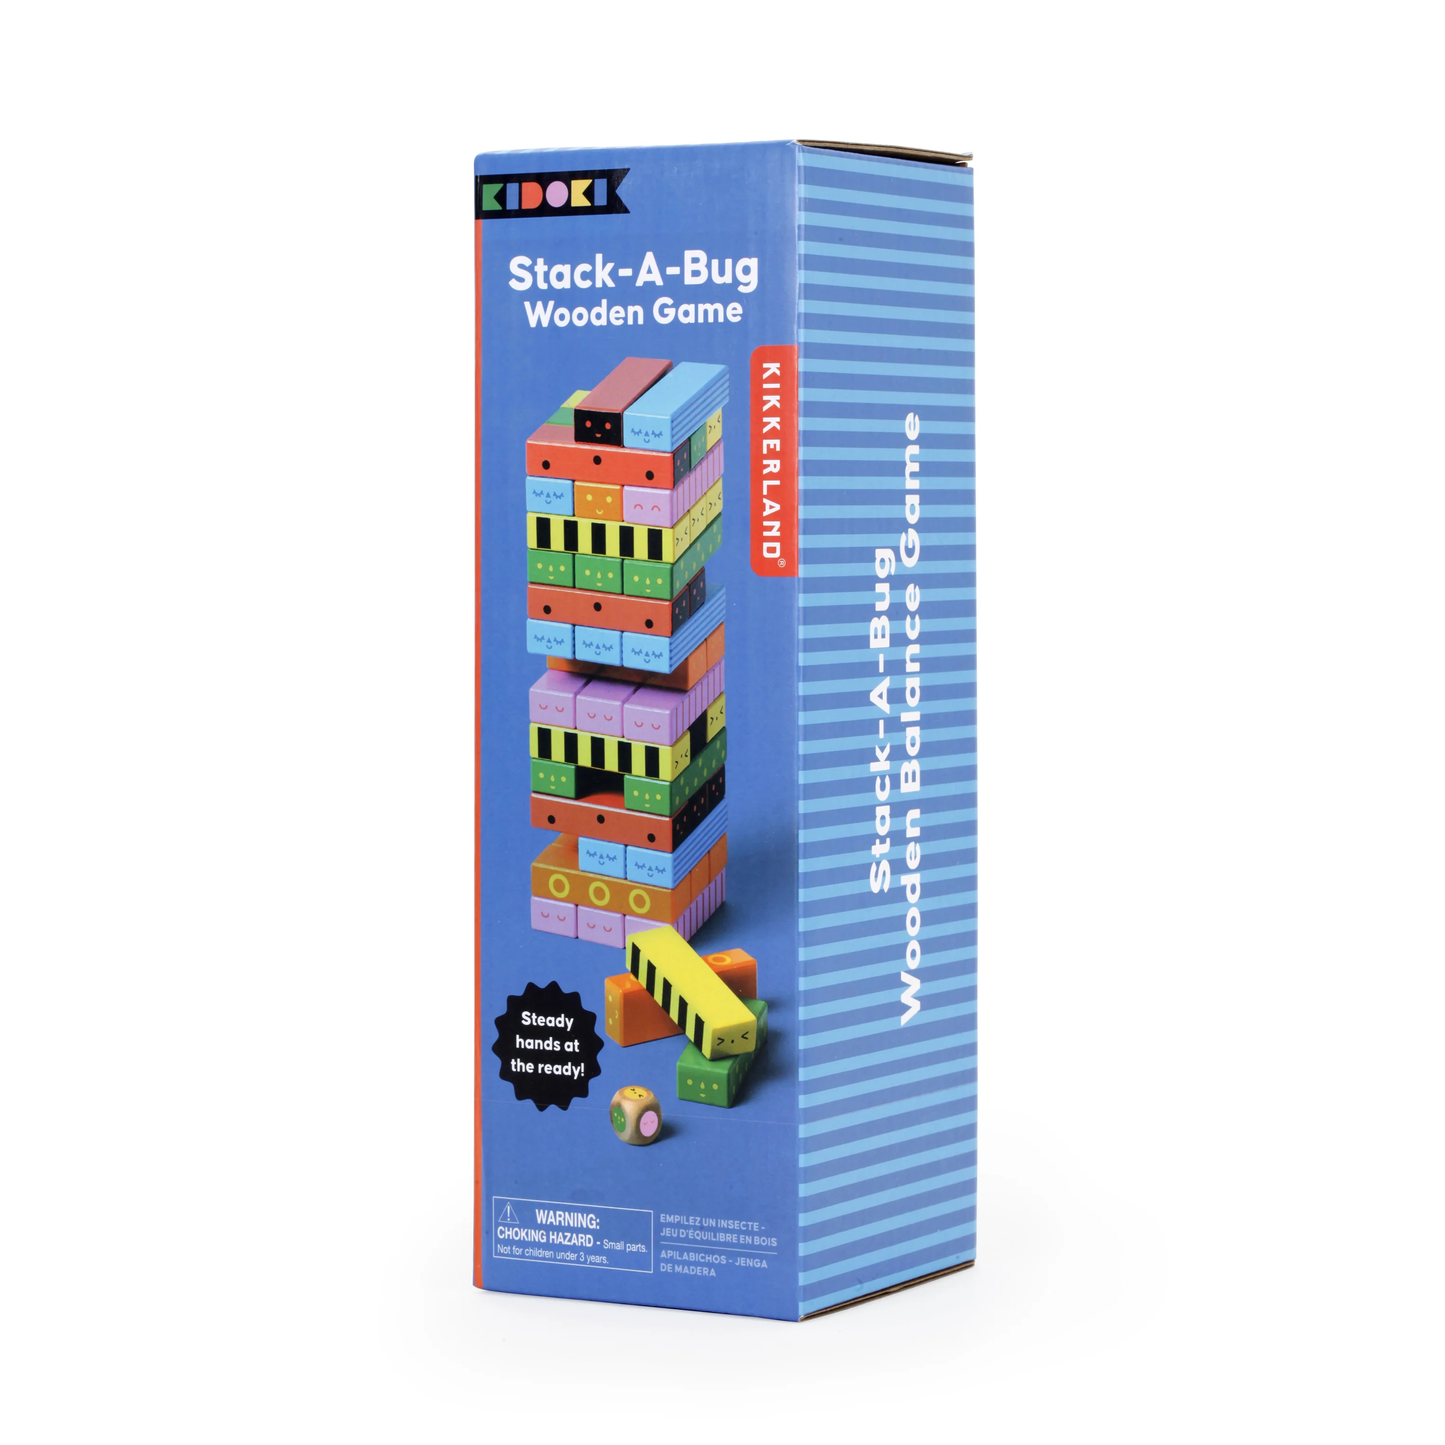 Kidoki Stack-A-Bug Wooden Game